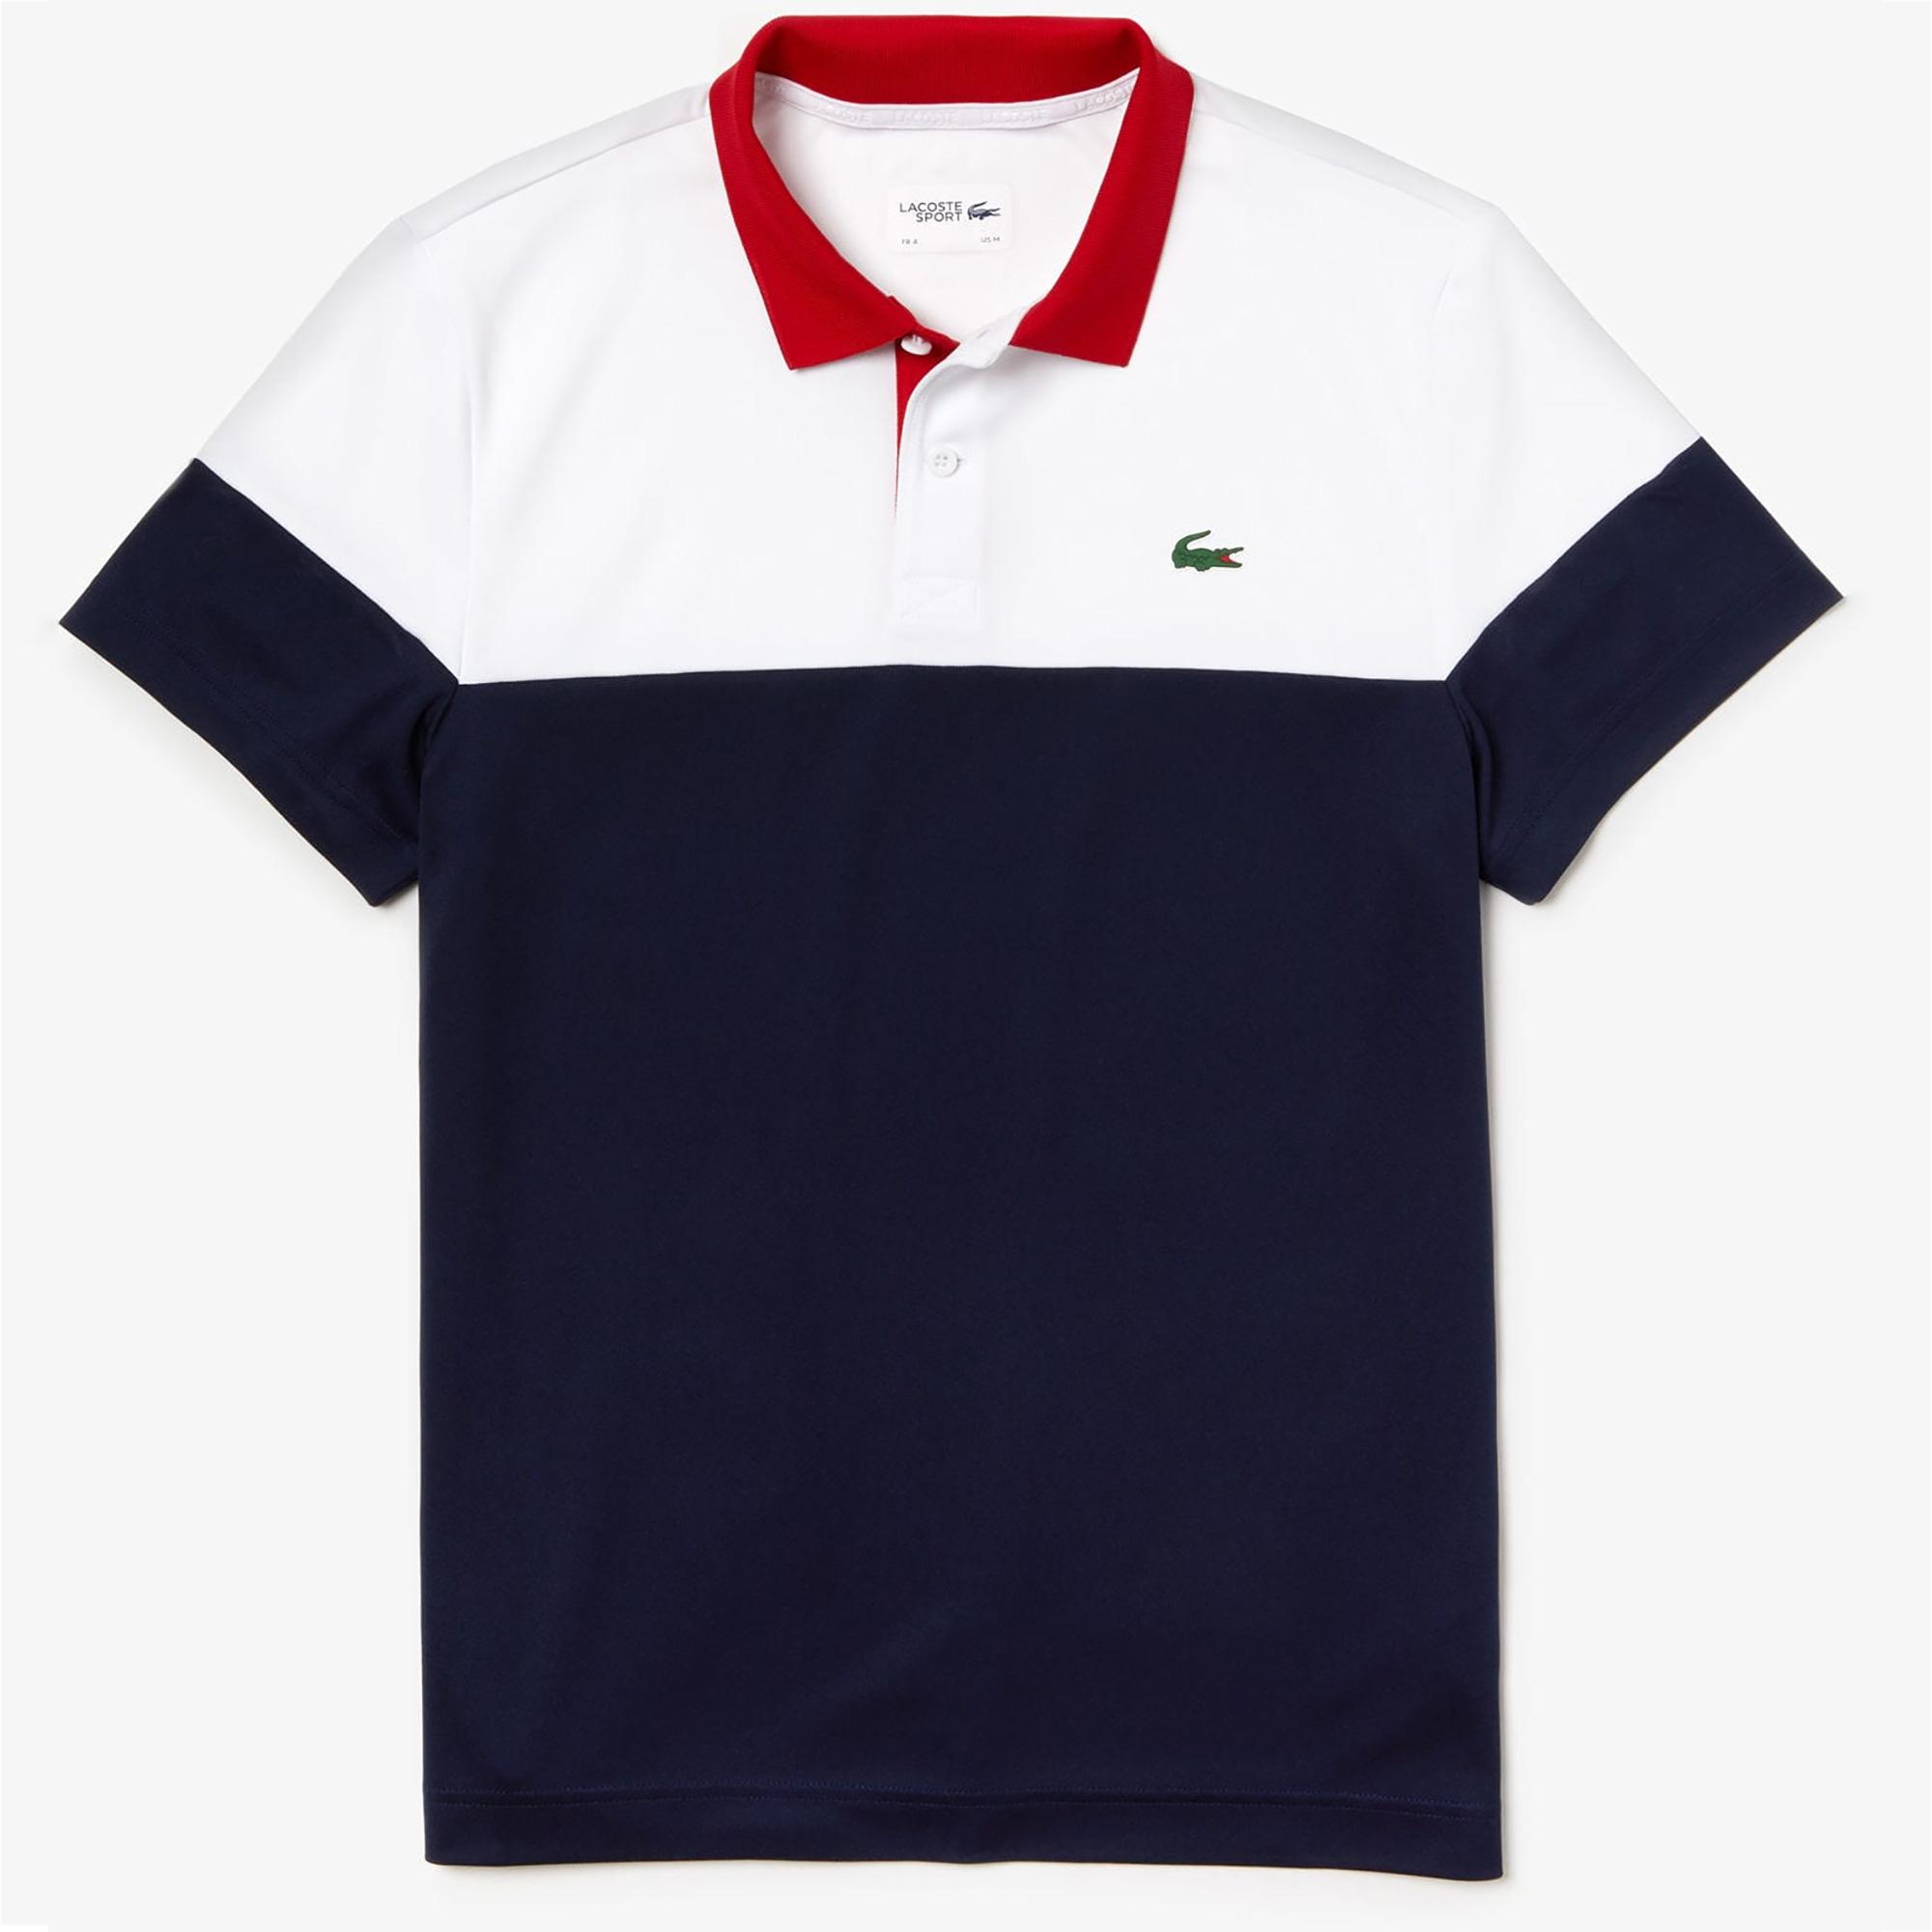 Lacoste Mens Technical Polo Shirt - White/Navy Blue/Red - Tennisnuts.com